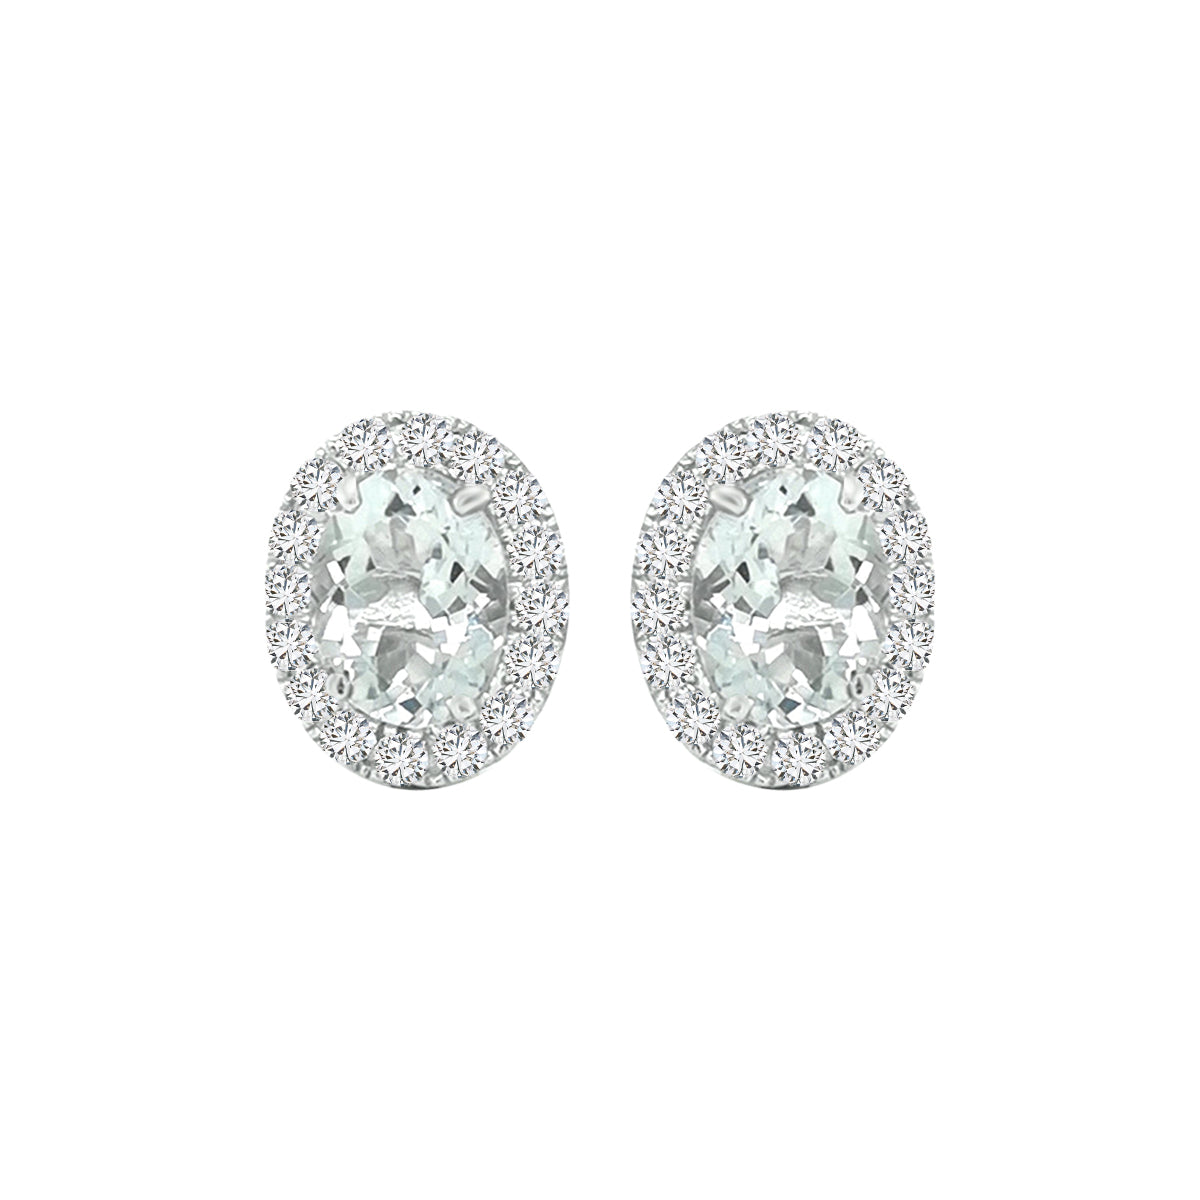 Aquamarine And Diamond Earrings In 18k White Gold.